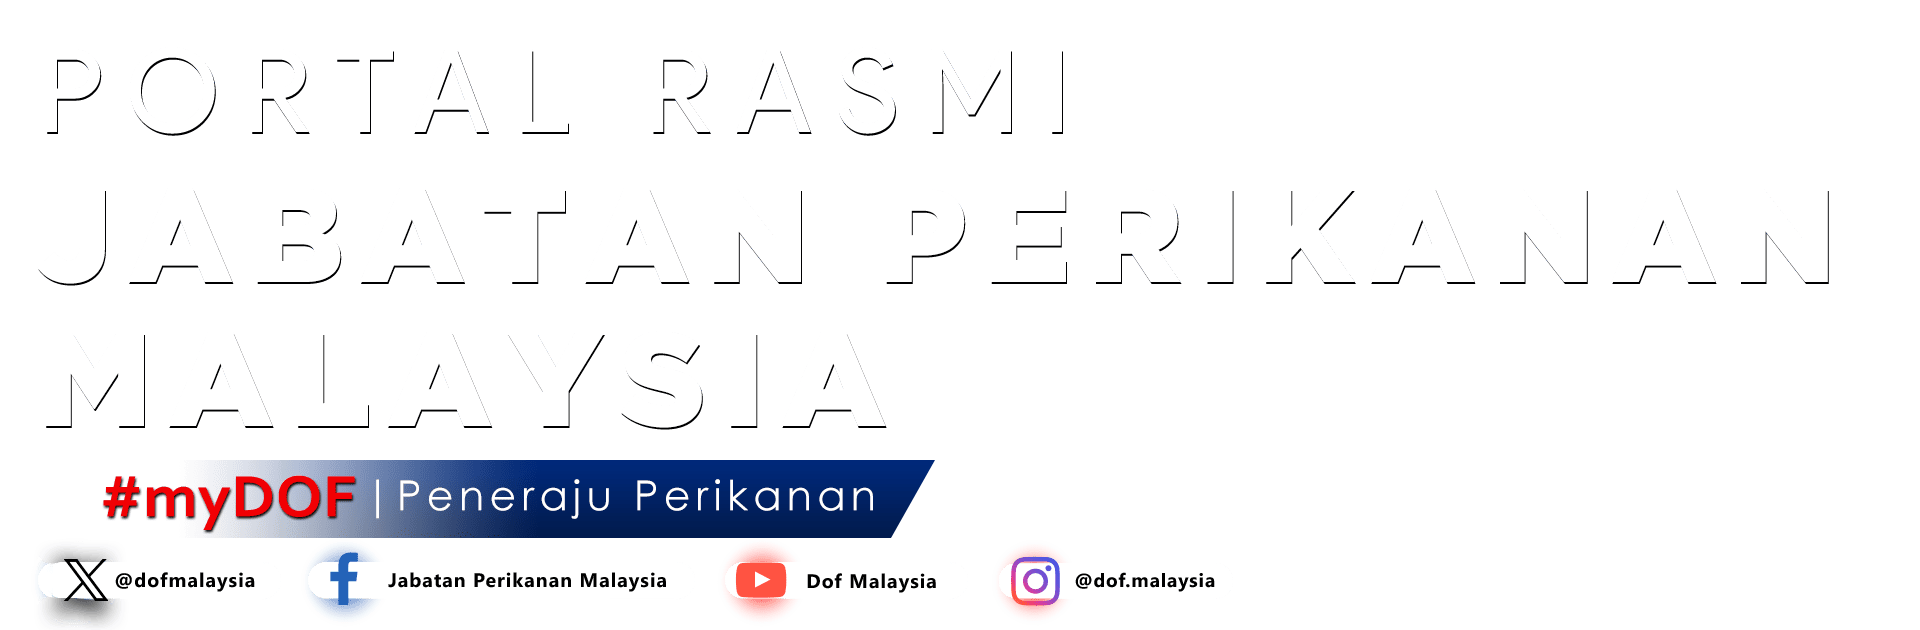 Banner - Portal Rasmi, Jabatan Perikanan Malaysia